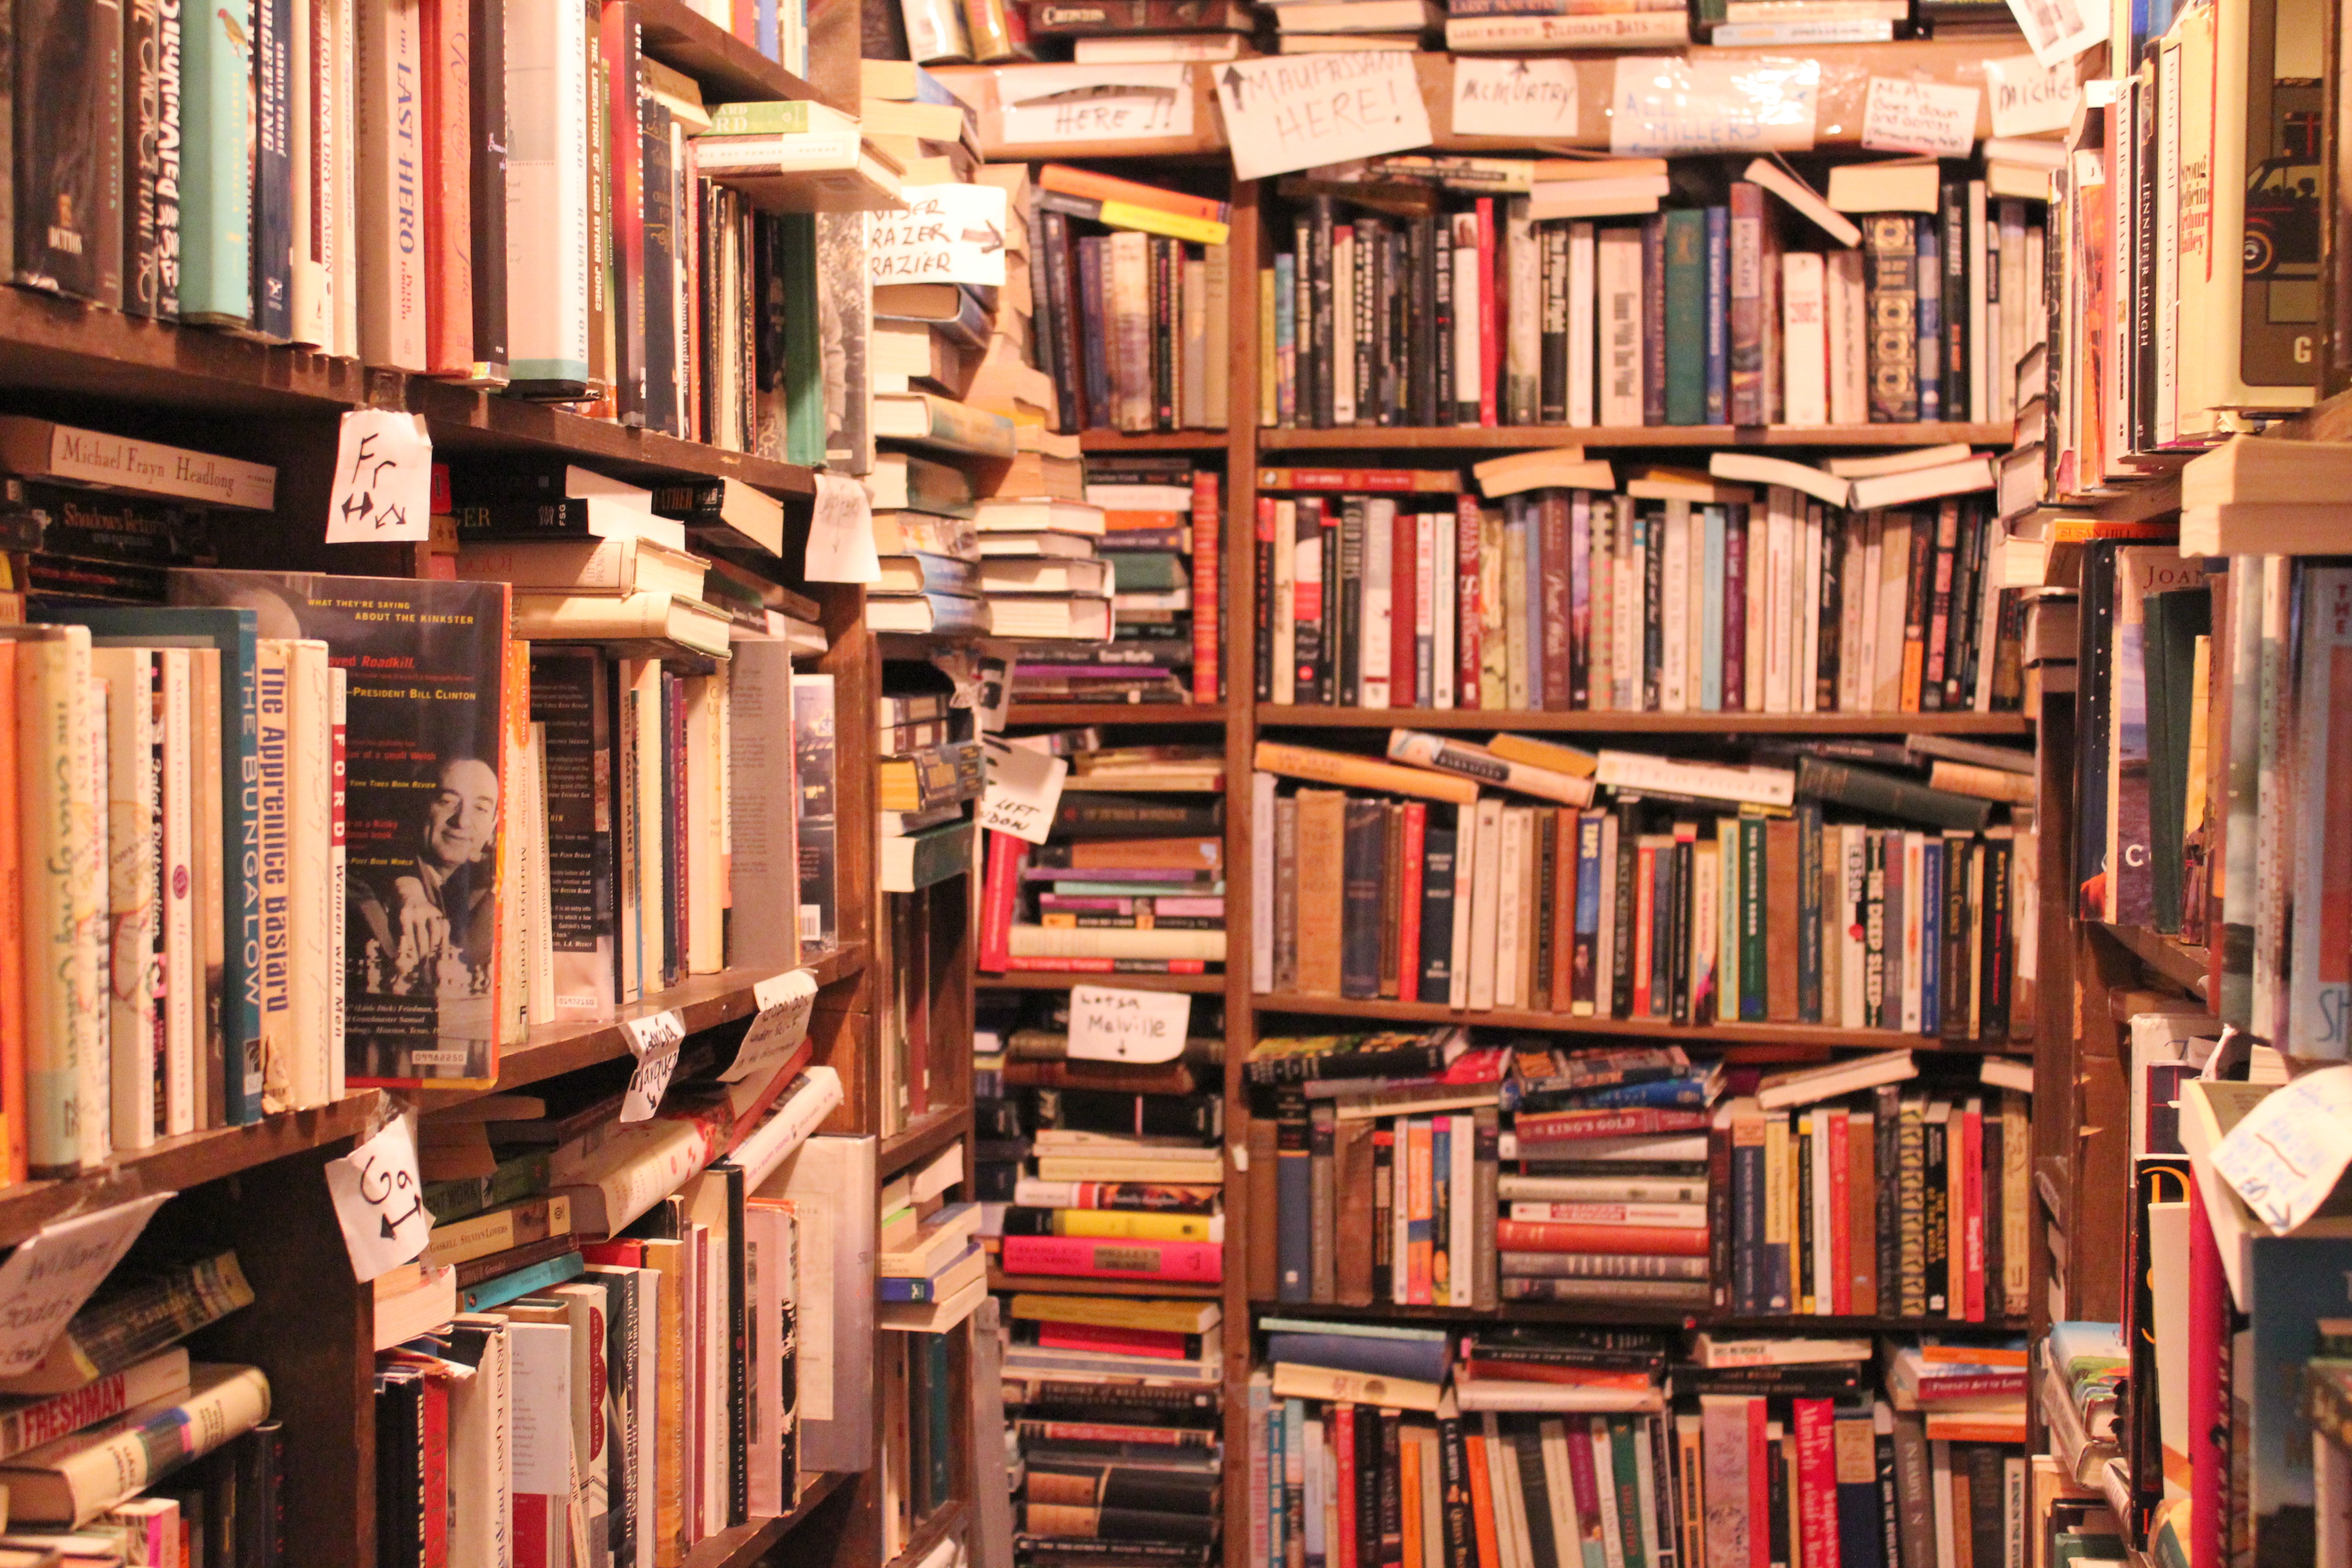 disorderly, overstuffed bookstore shelves